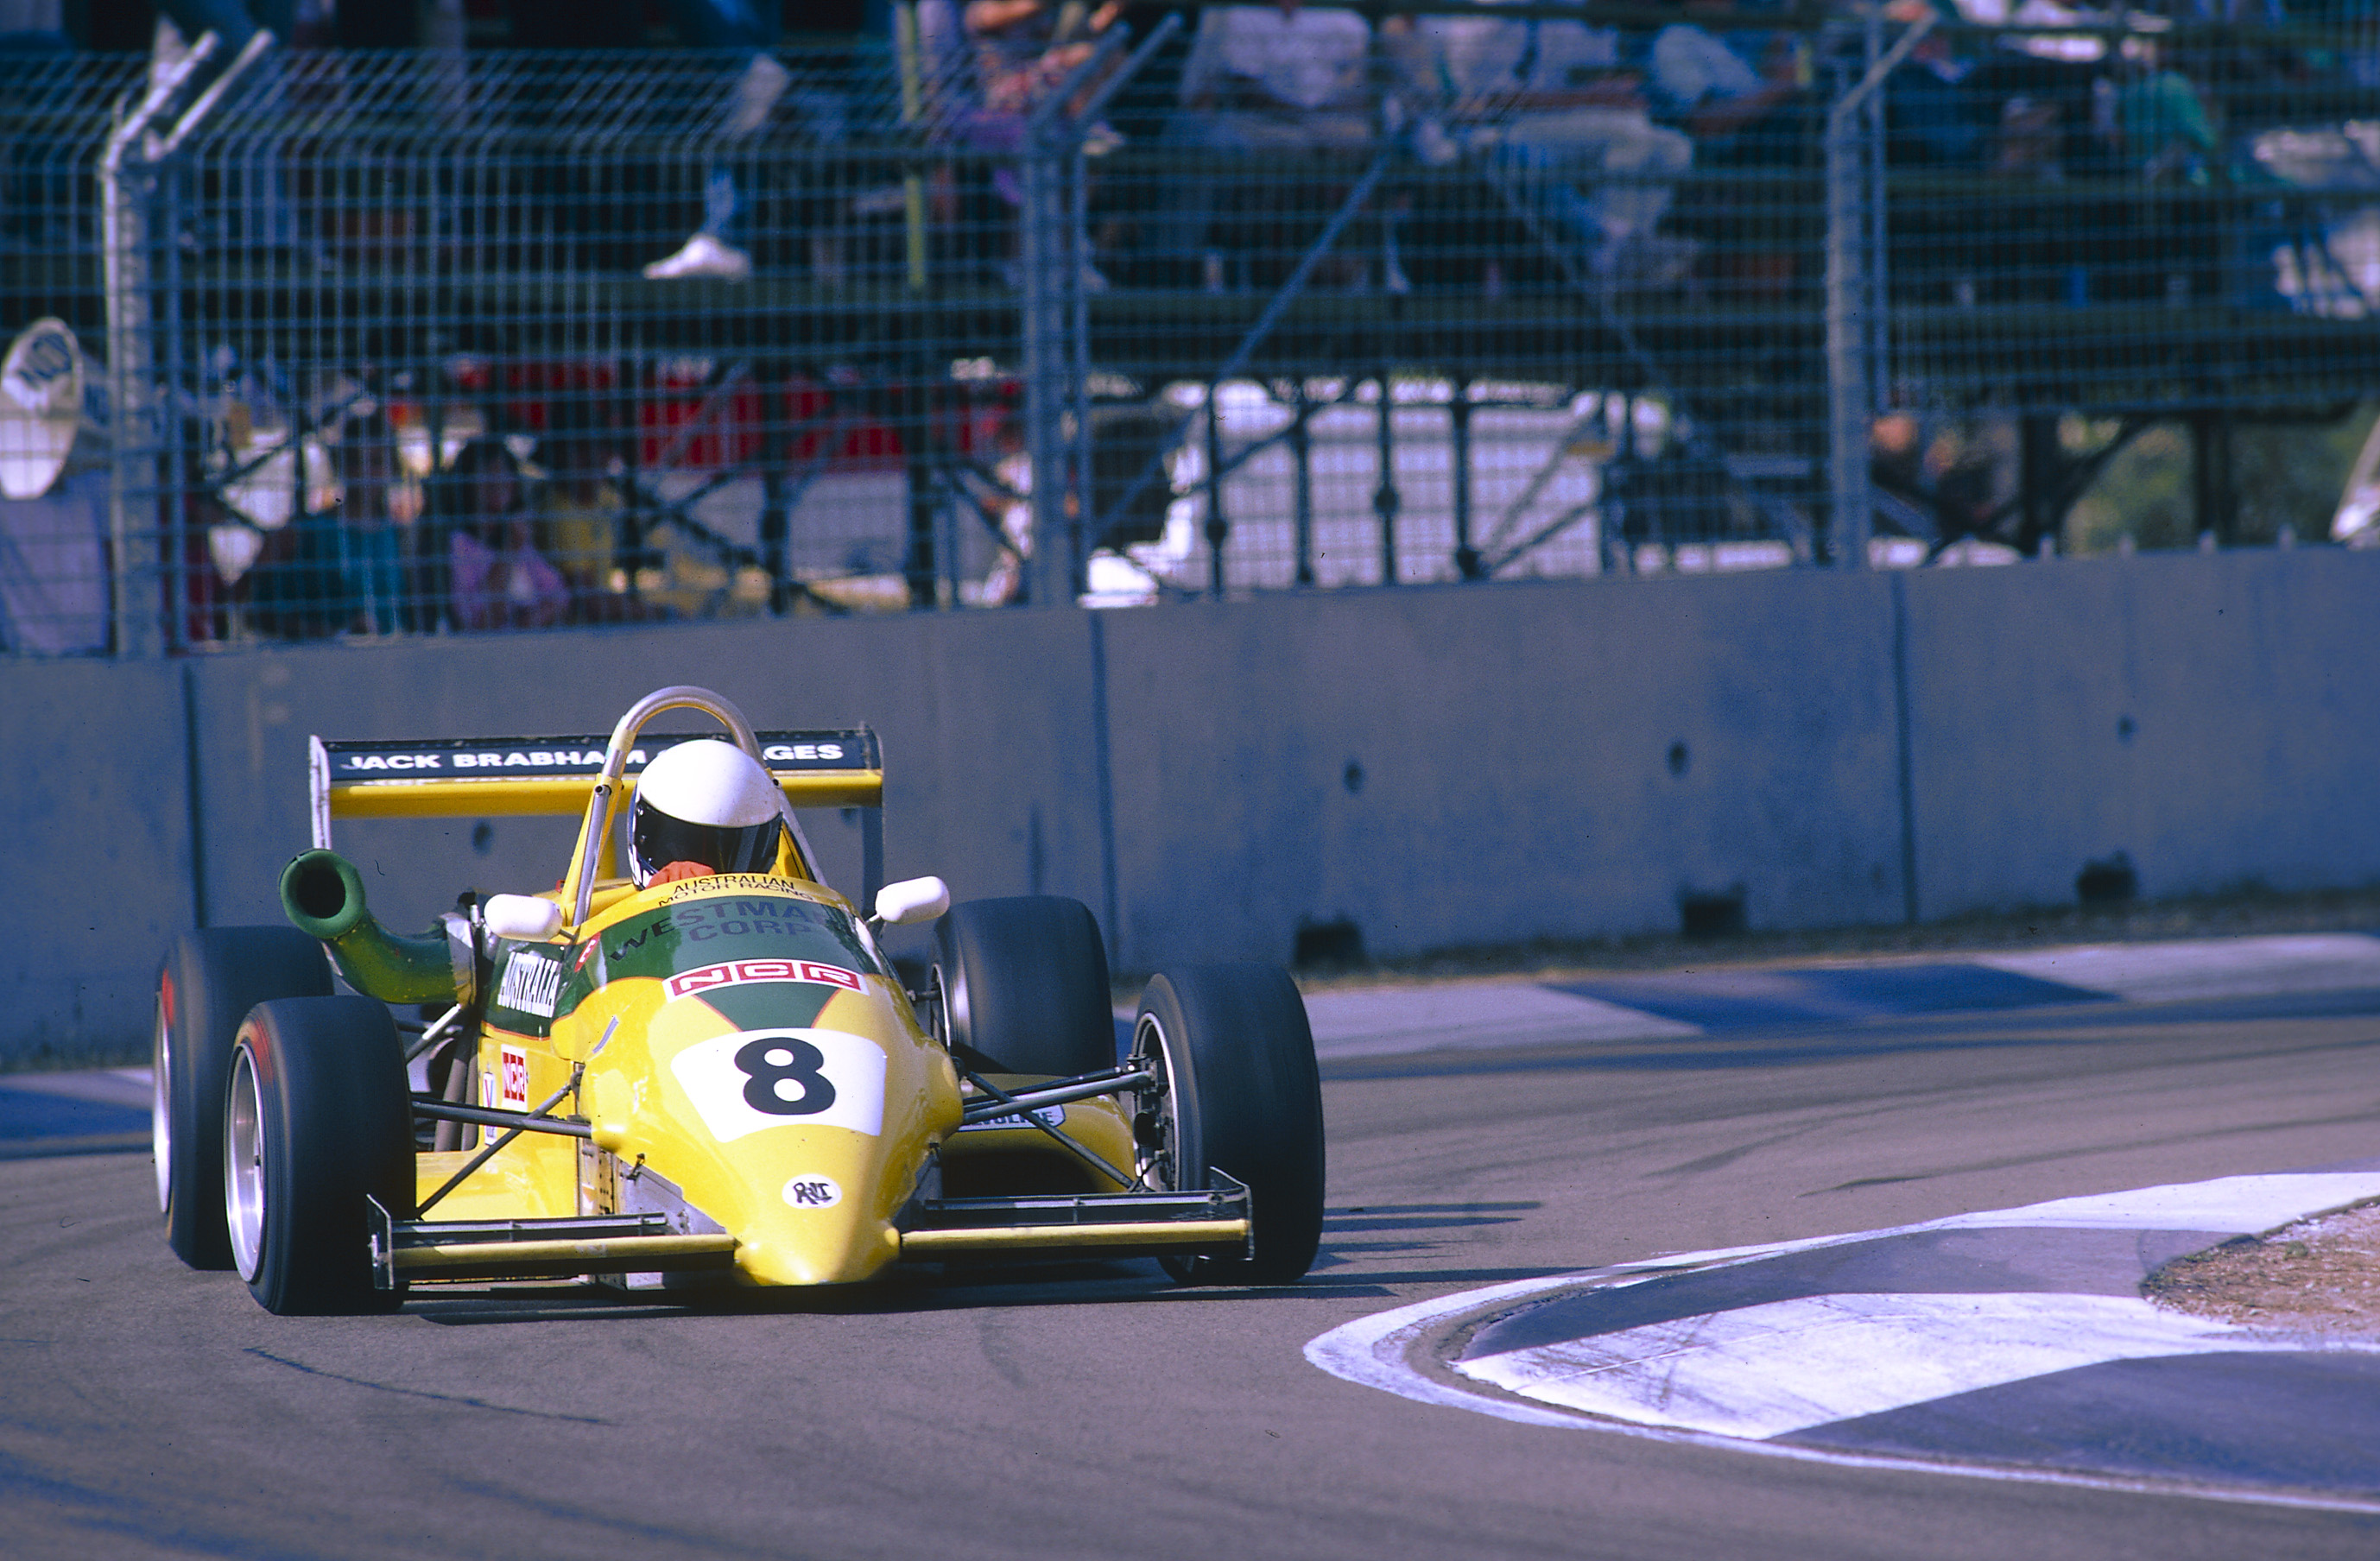 Brabham driving an F2 Ralt in Australia, 1987